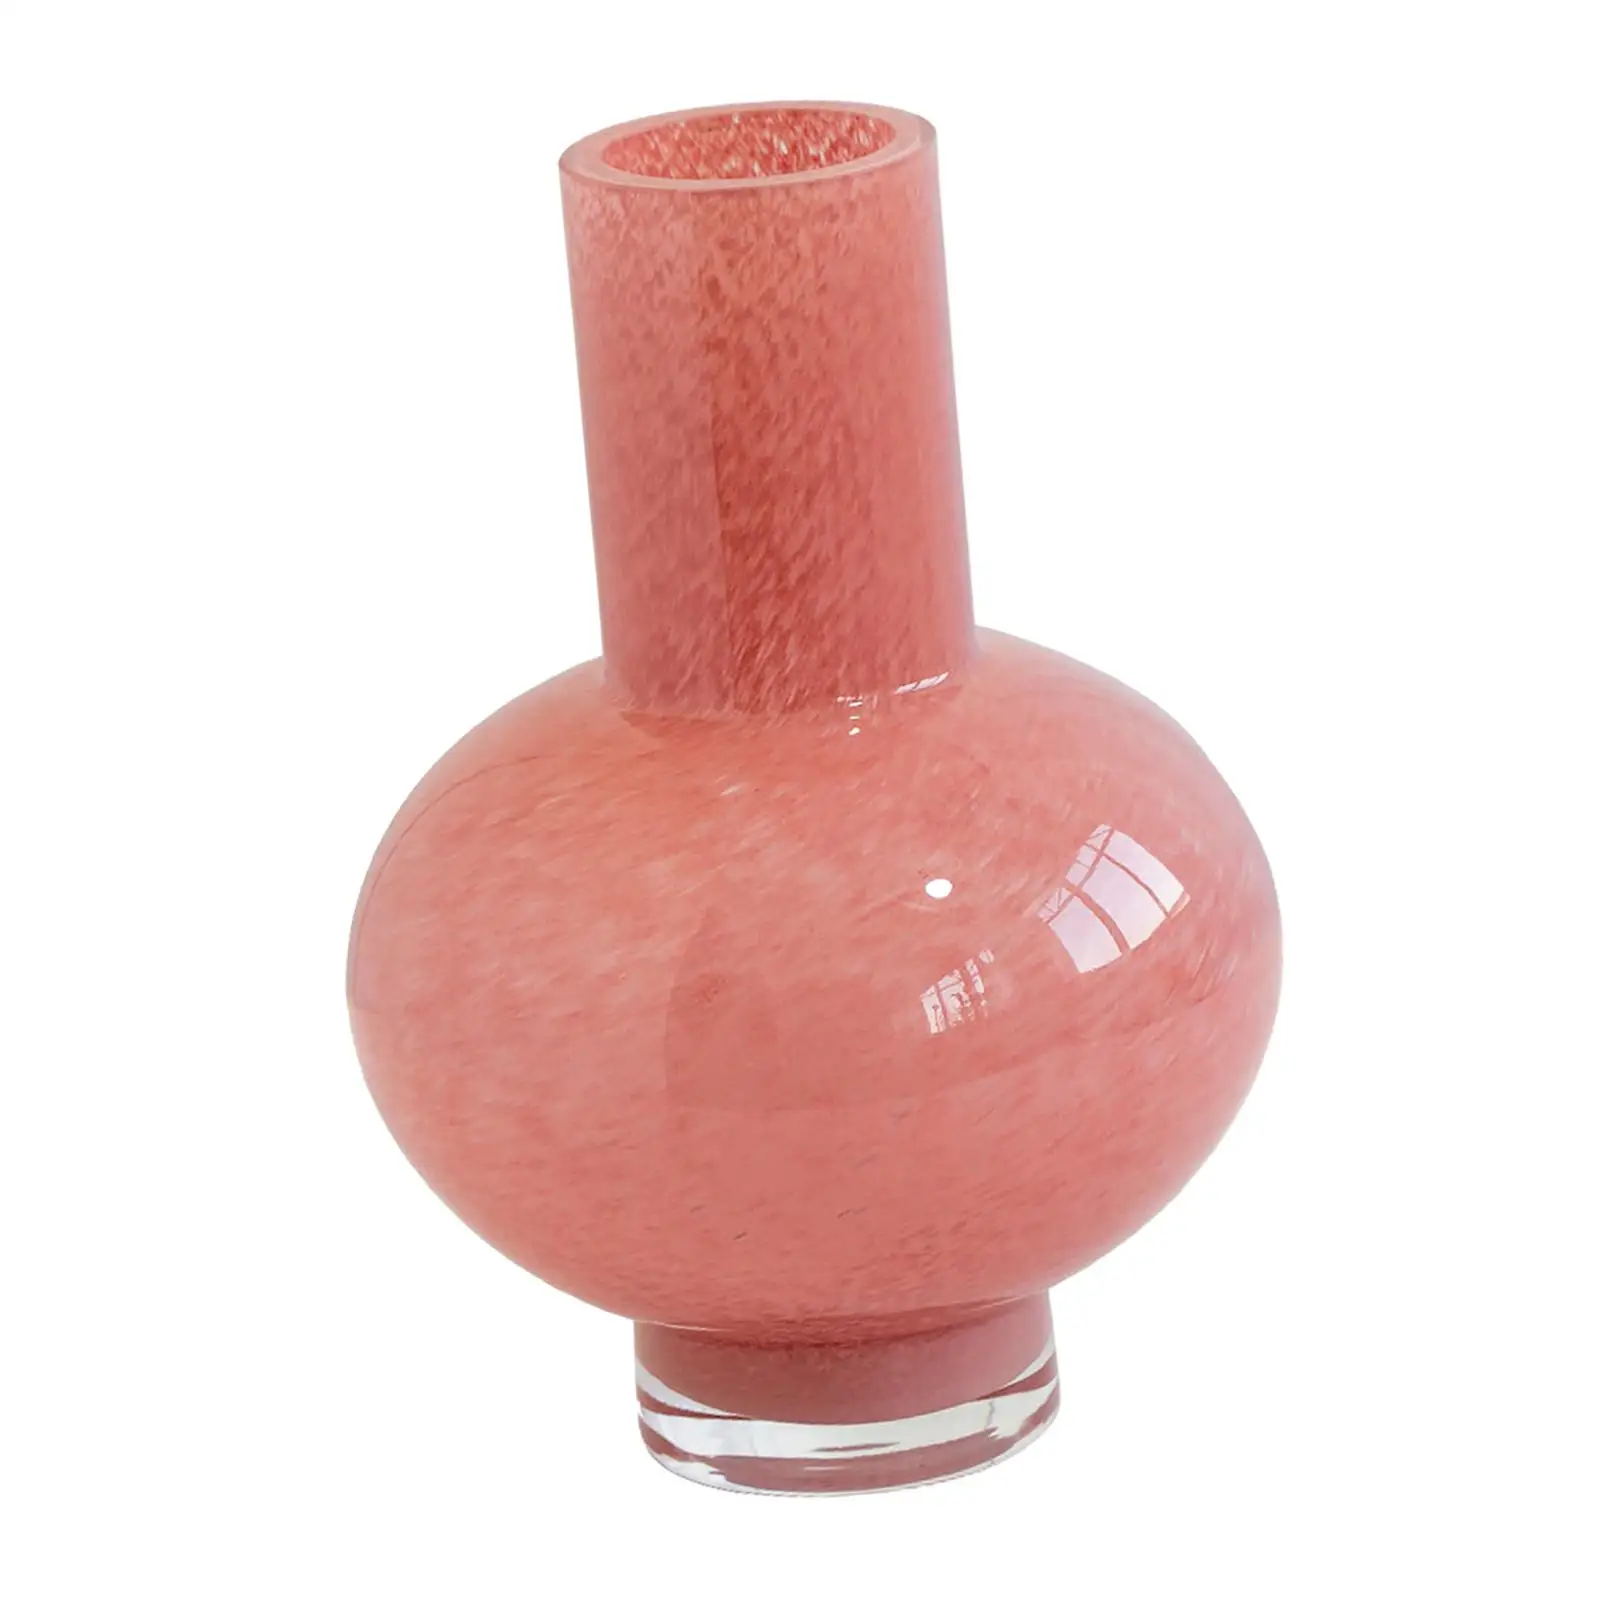 Glass Flower Vase Simple Pink Glaze Flowerpot Flower Pot Desktop Ornament for Bedroom Coffee Table Desk Living Room Shelf